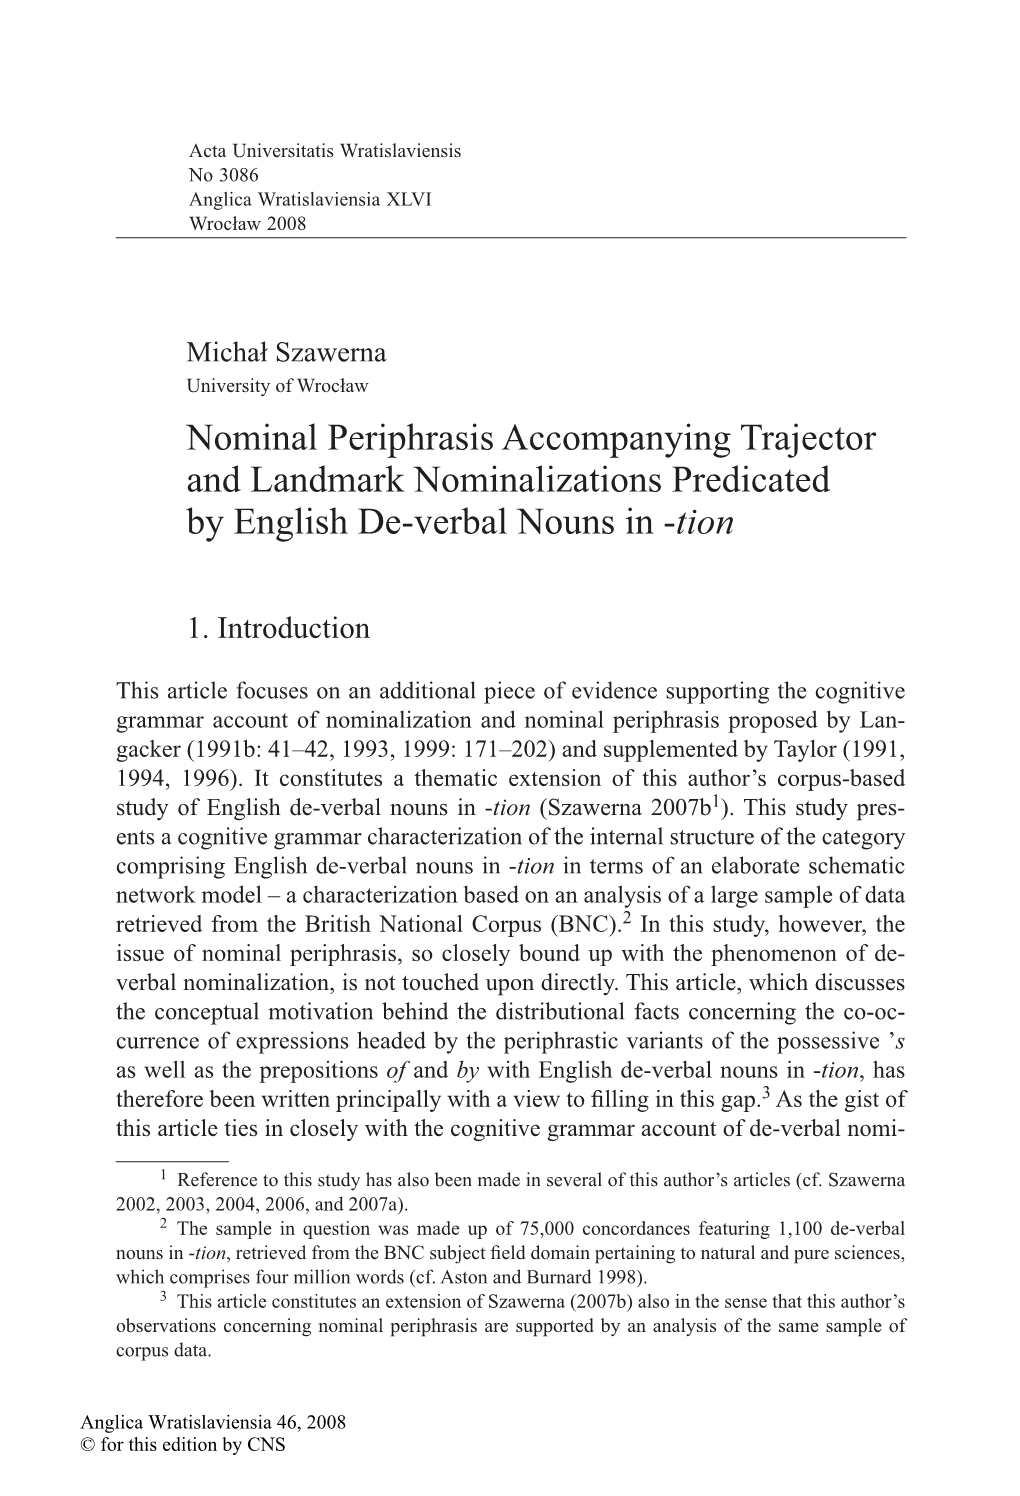 Nominal Periphrasis Accompanying Trajector and Landmark Nominalizations Predicated by English De-Verbal Nouns in -Tion